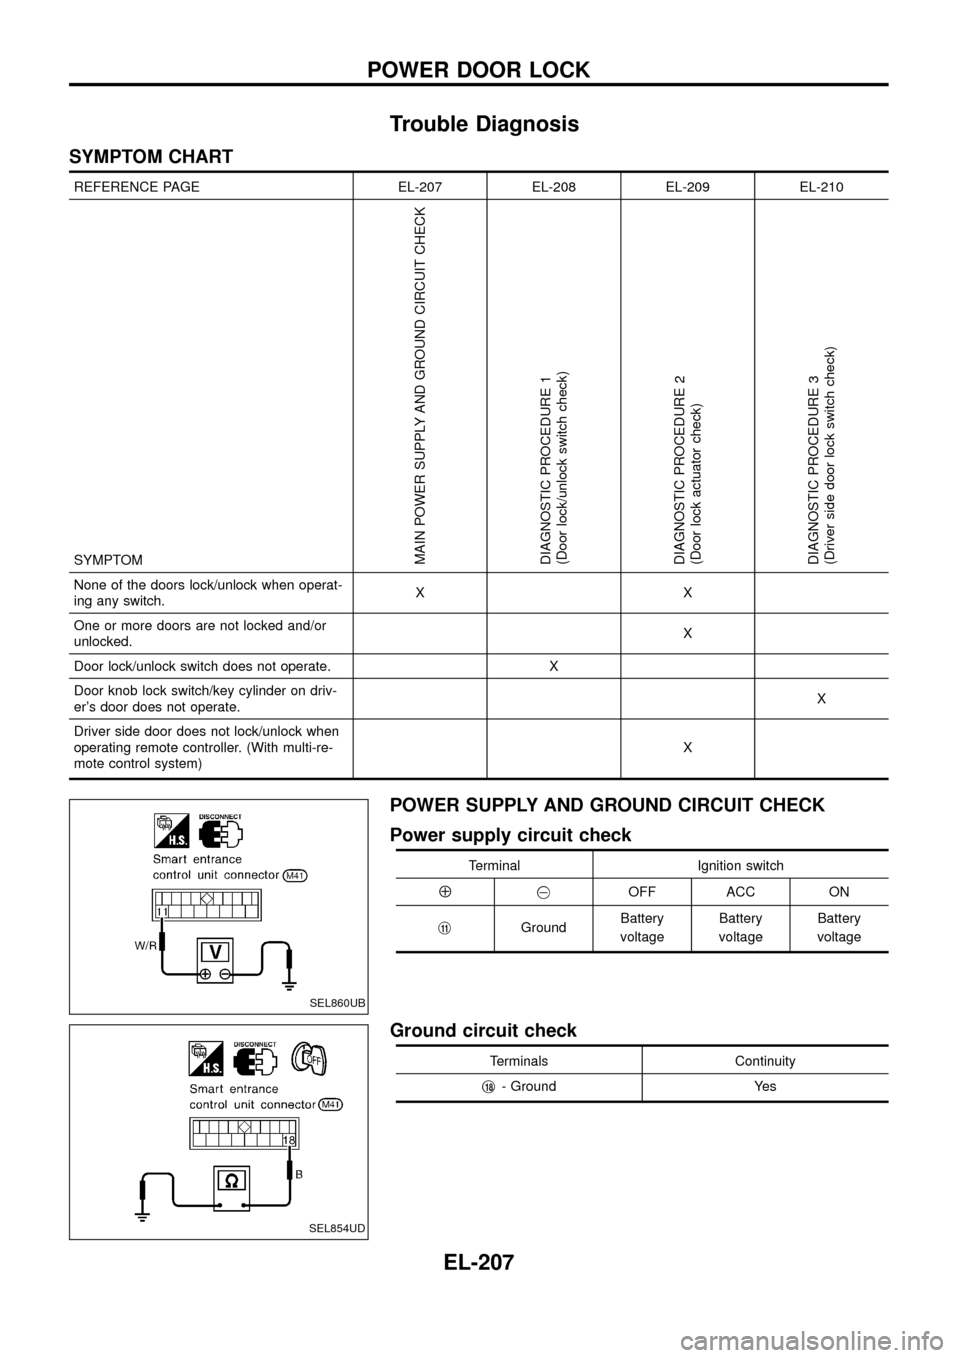 NISSAN PATROL 1998 Y61 / 5.G Electrical System Owners Guide Trouble Diagnosis
SYMPTOM CHART
REFERENCE PAGE EL-207 EL-208 EL-209 EL-210
SYMPTOM
MAIN POWER SUPPLY AND GROUND CIRCUIT CHECK
DIAGNOSTIC PROCEDURE 1
(Door lock/unlock switch check)
DIAGNOSTIC PROCEDUR